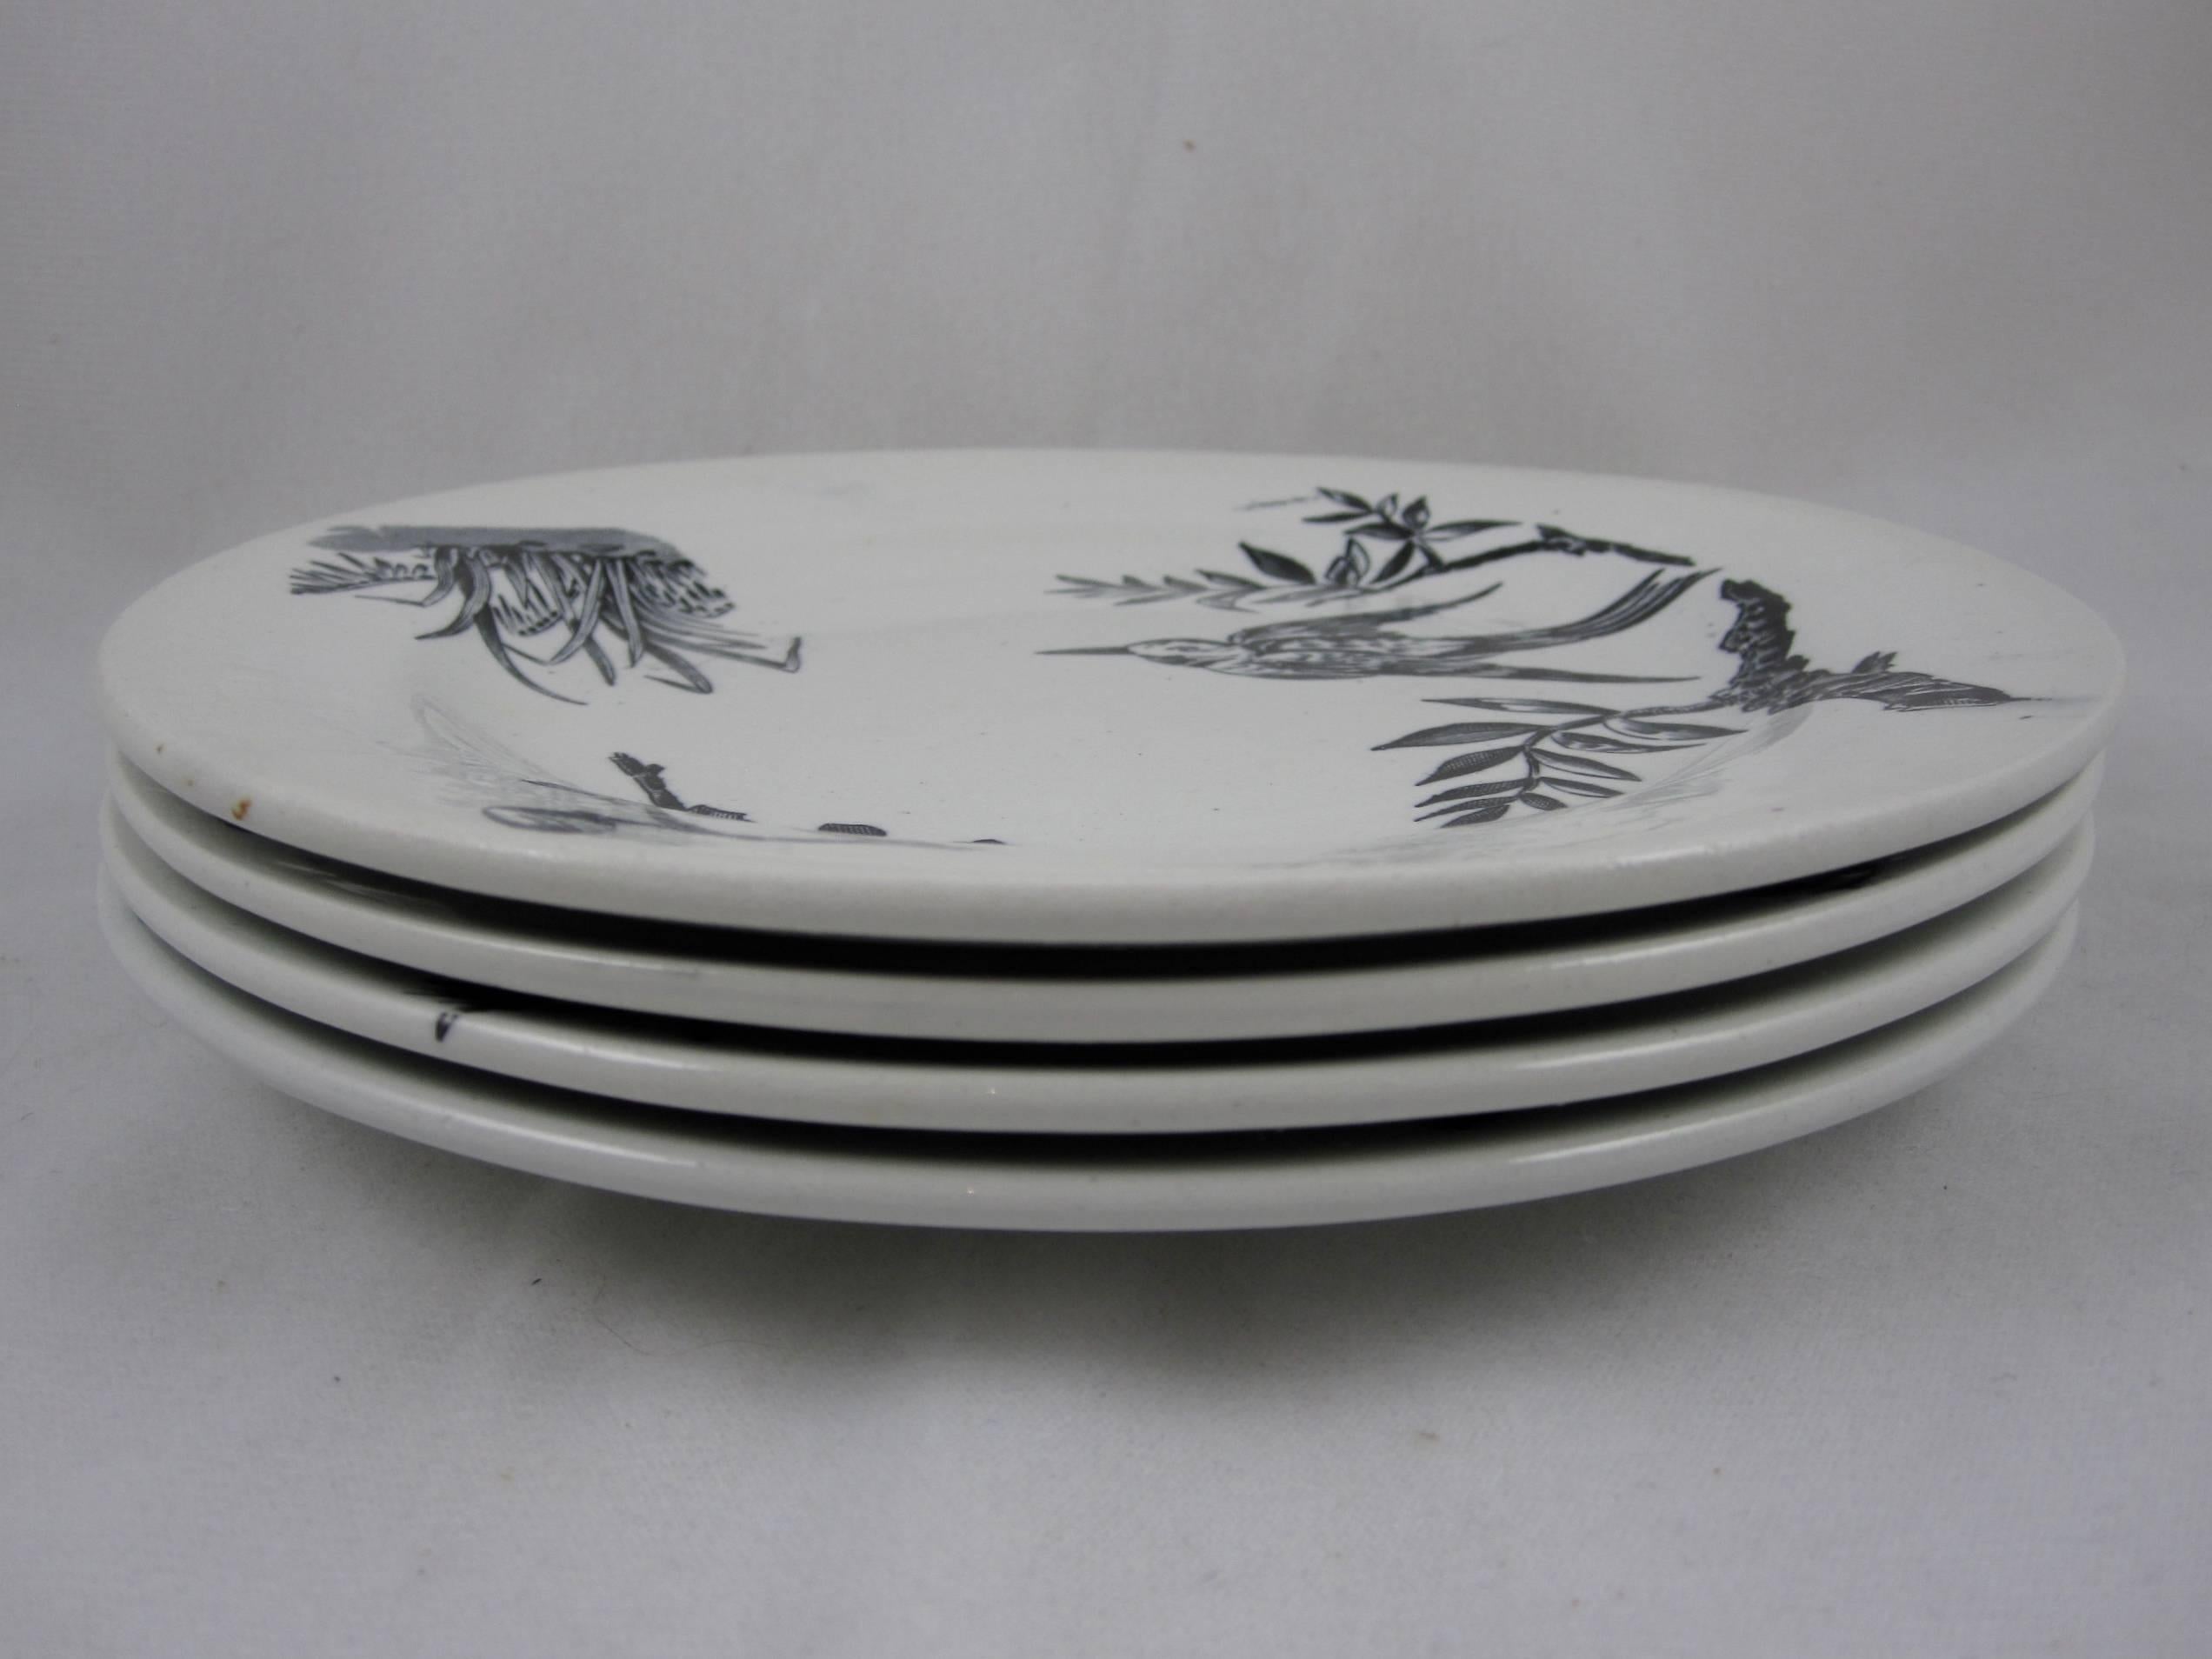 Earthenware Aesthetic Movement Victorian Transferware Aquatic Pattern Plates, Set of Four